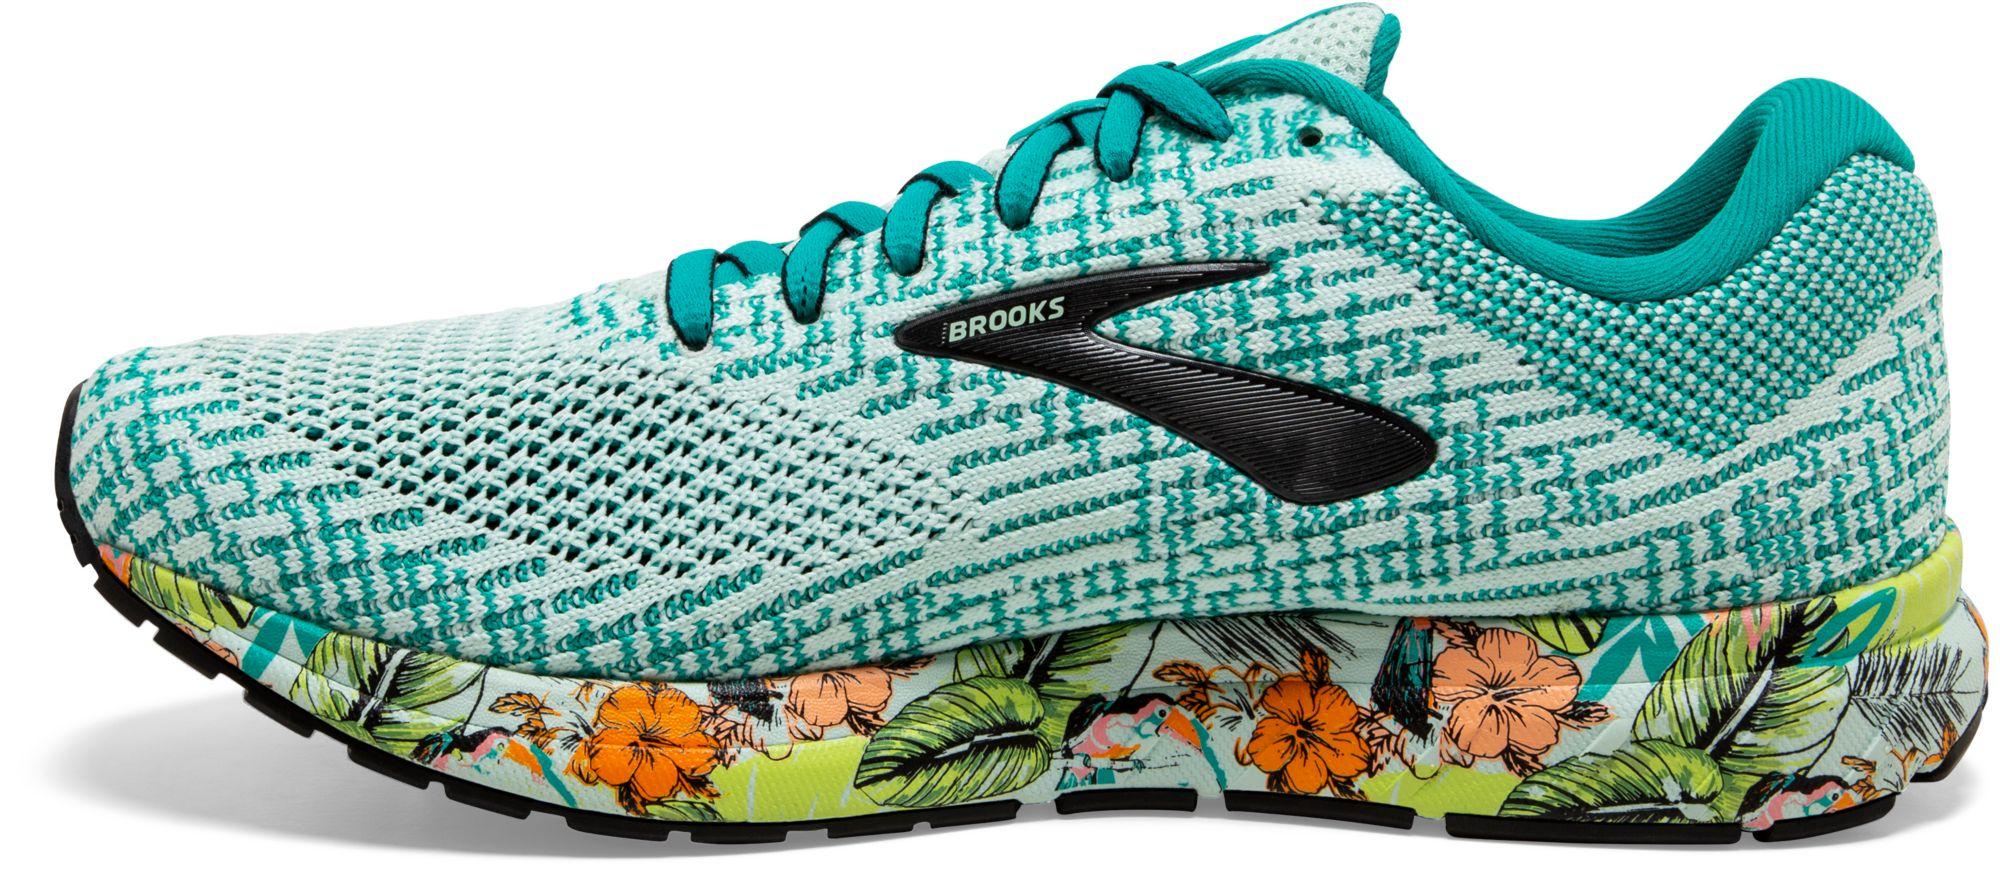 brooks tropical sneakers